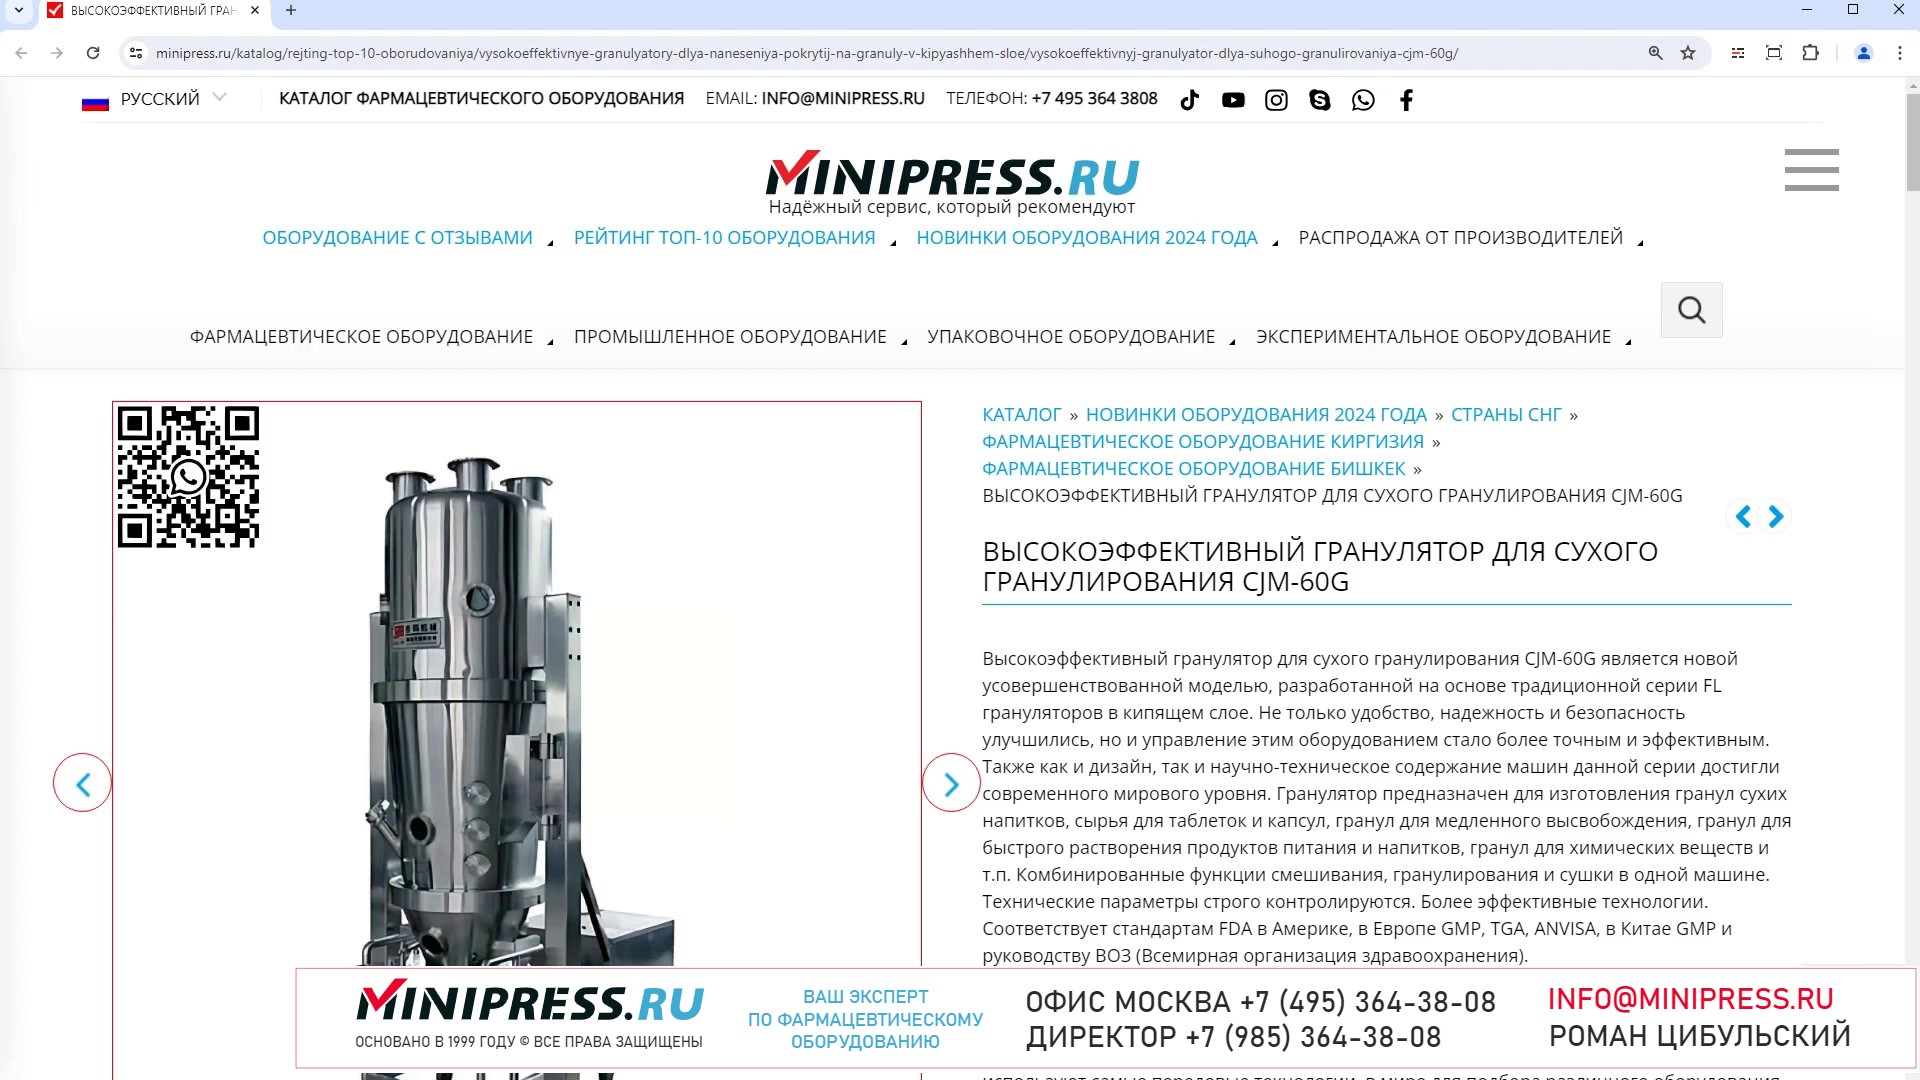 Minipress.ru Высокоэффективный гранулятор для сухого гранулирования CJM-60G